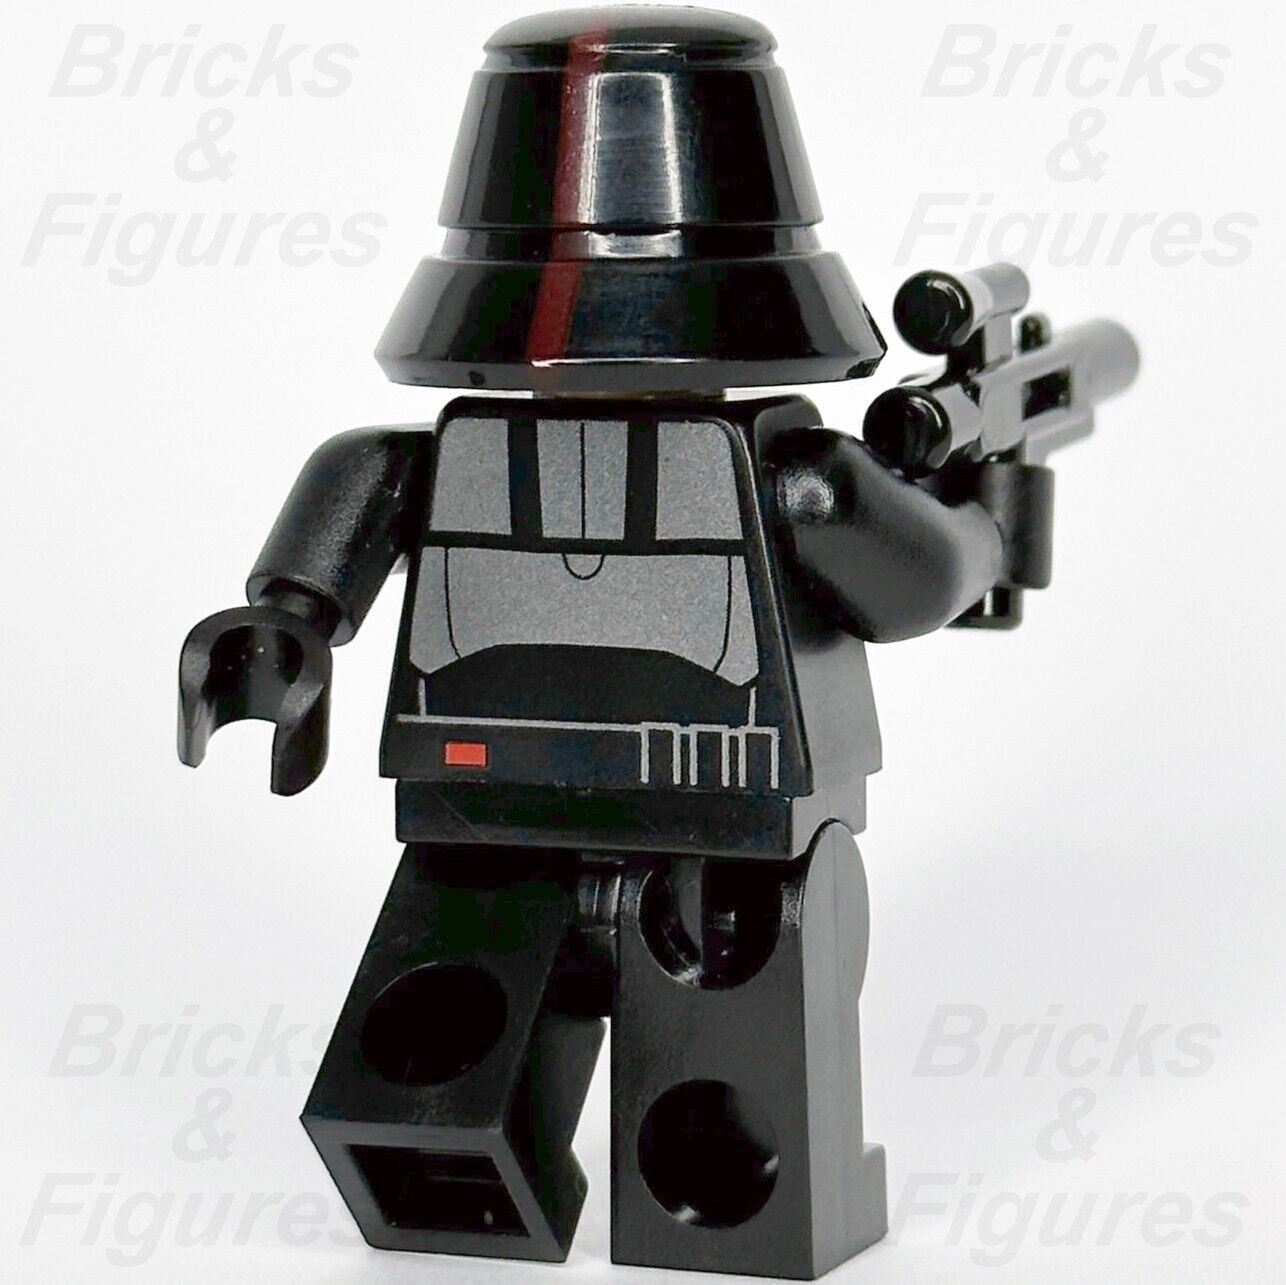 Figurines type lego Sith Dark Vador + 2 stormtroopers star wars - Star Wars